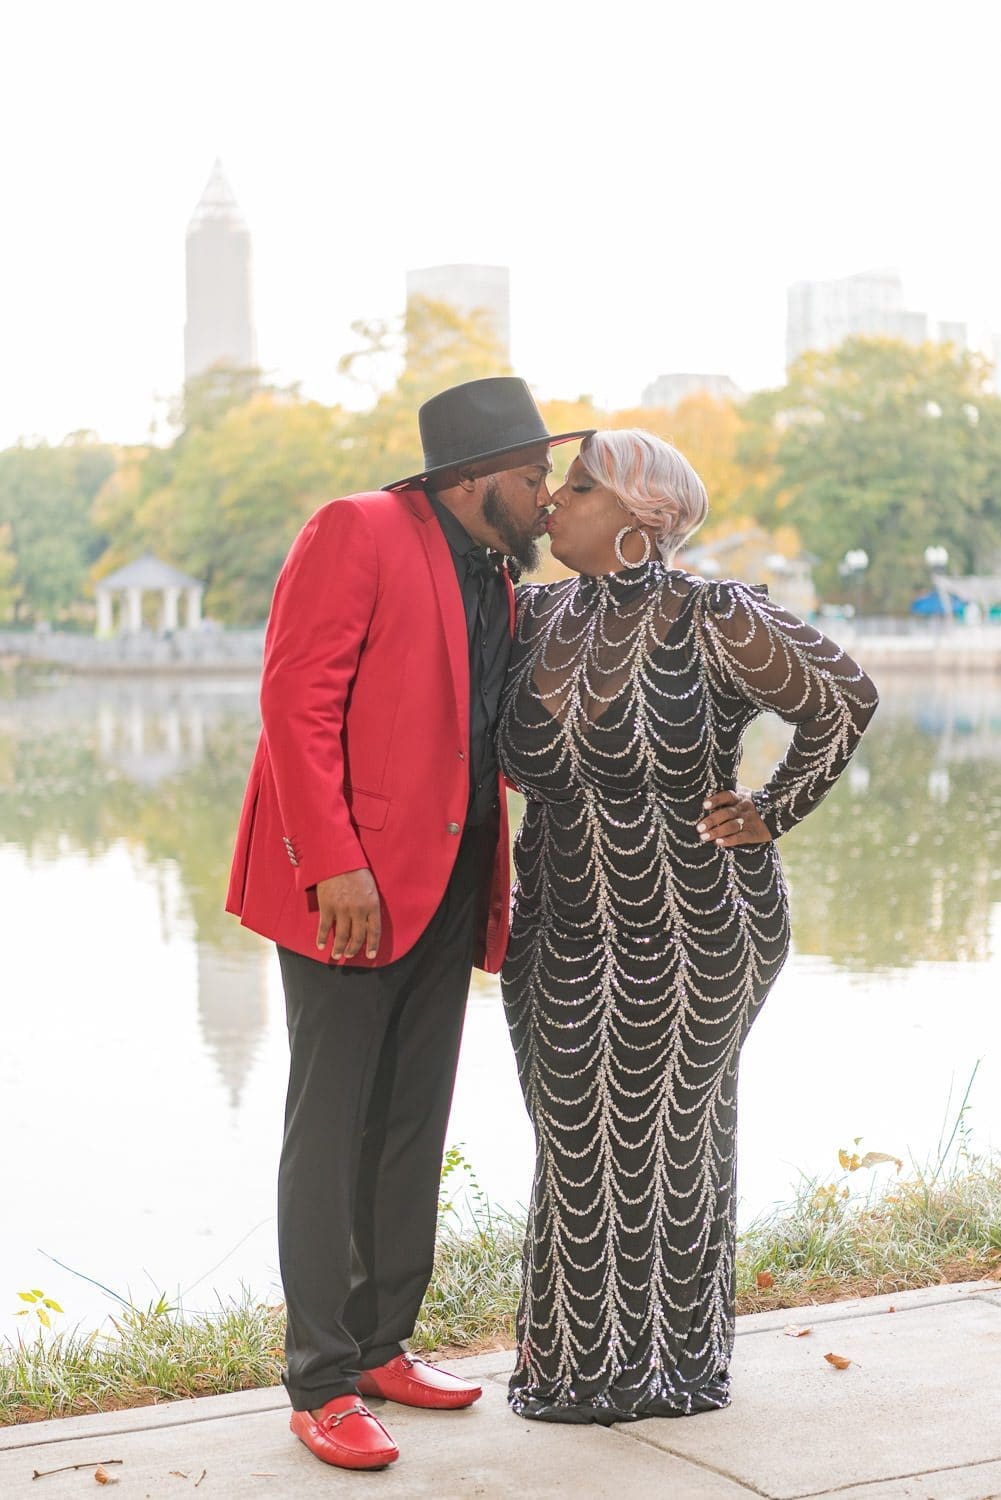 Atlanta Wedding Photographer FAQ - Piedmont Park engagement session, outfit changes/different wardrobe looks